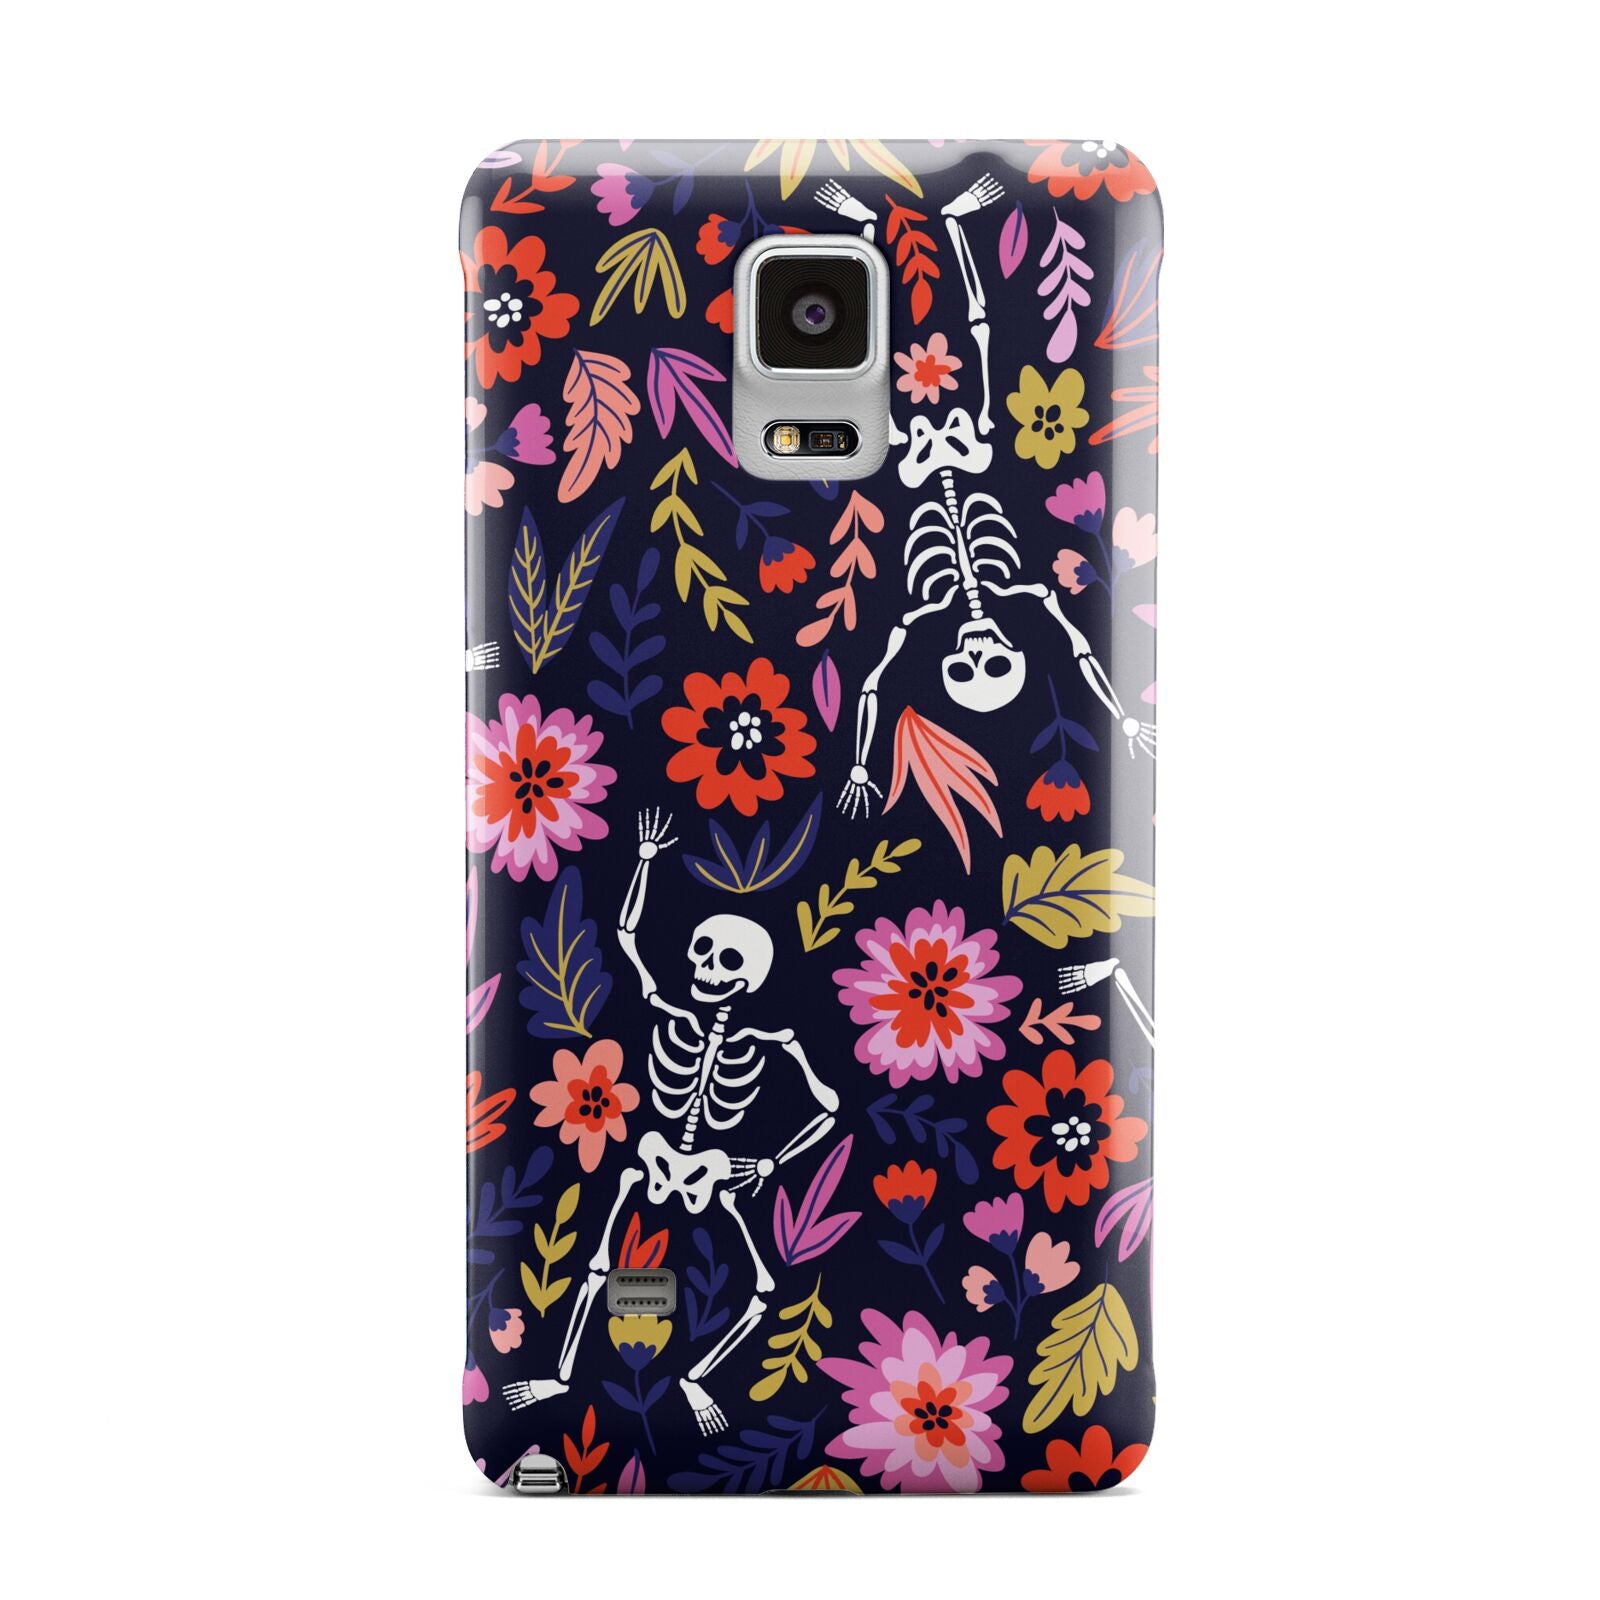 Floral Skeleton Samsung Galaxy Note 4 Case